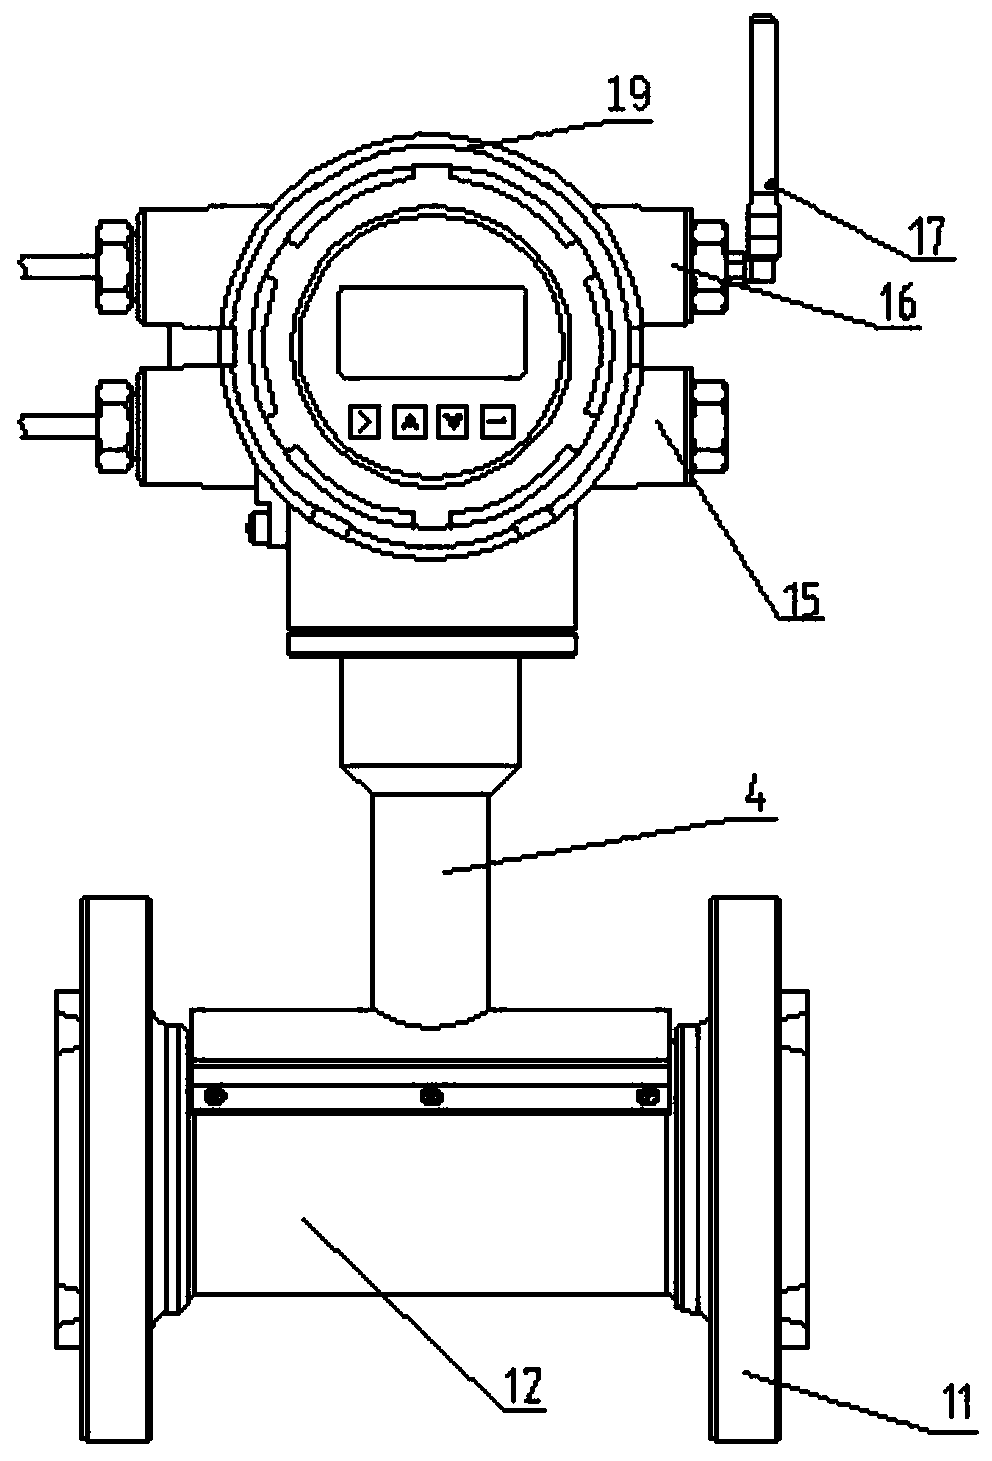 Multi-parameter single well metering device